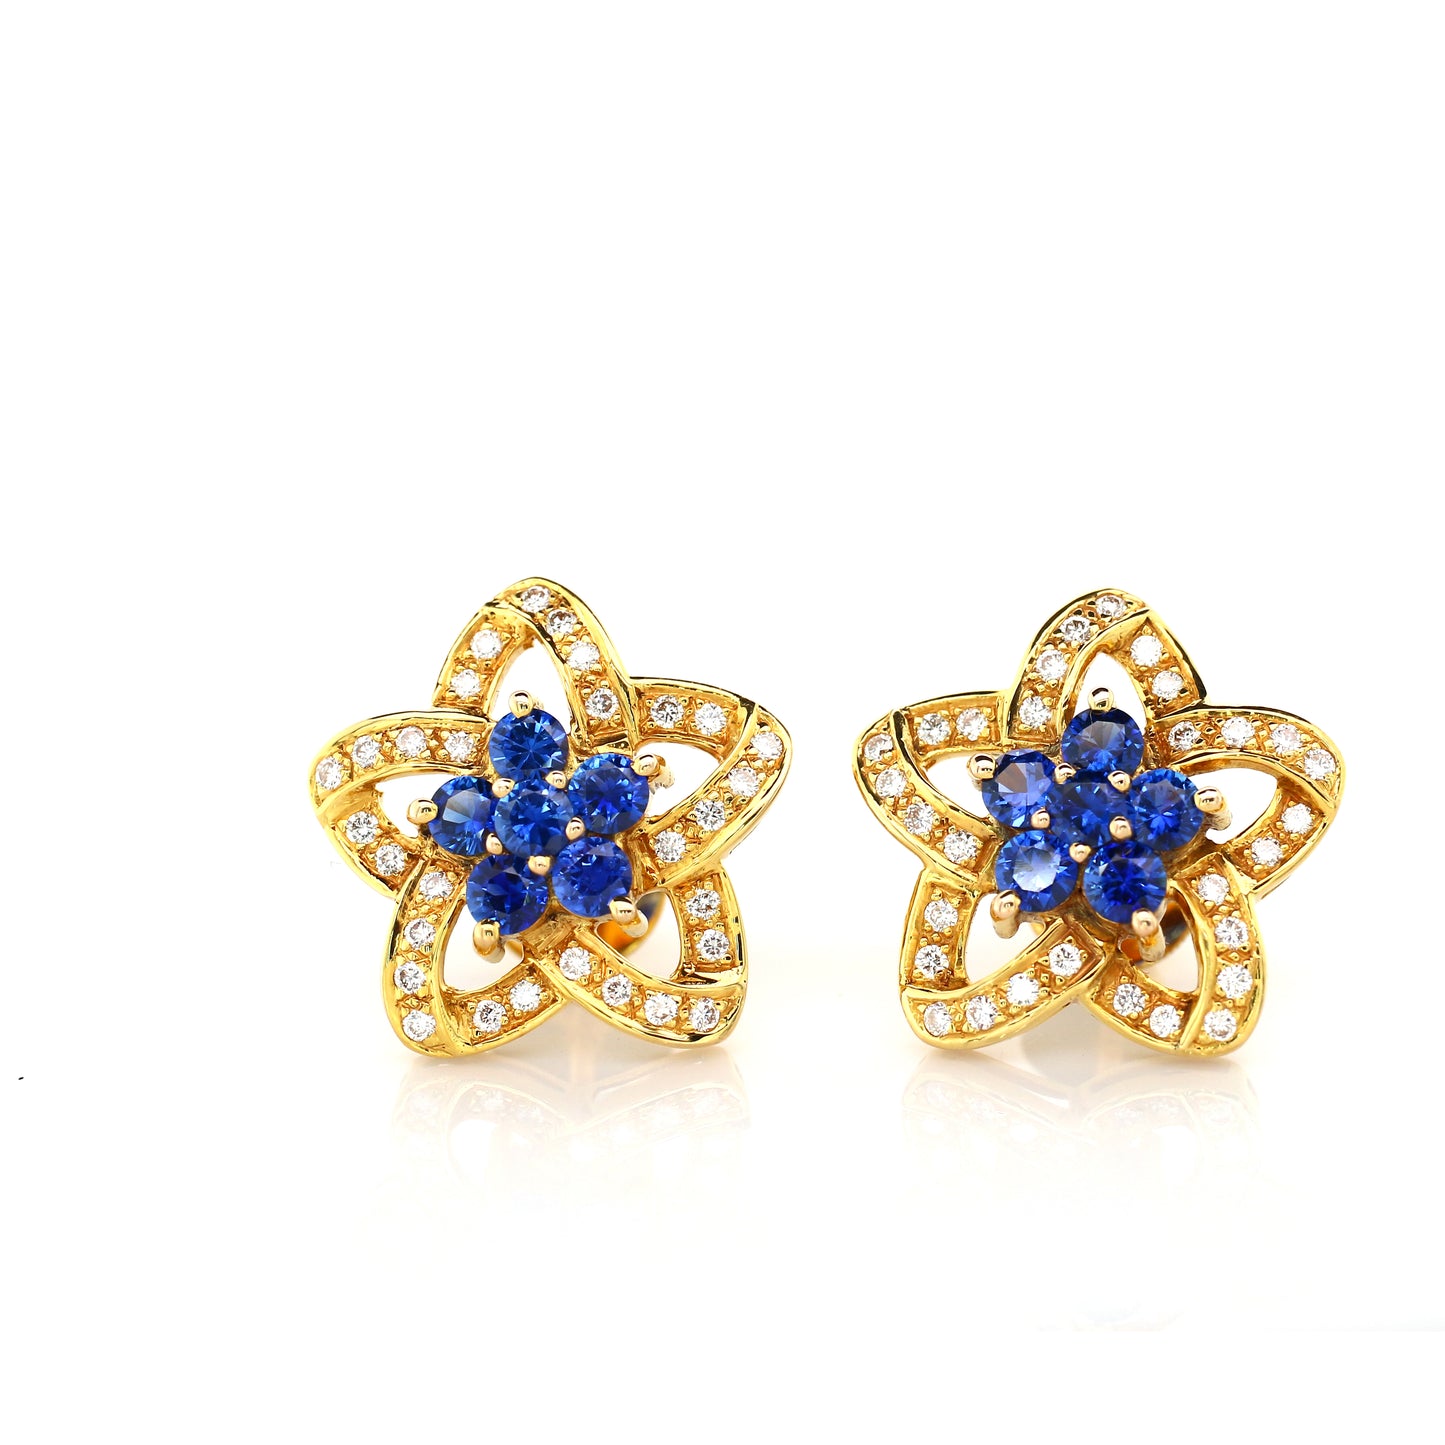 Blue Sapphire & Diamond Earring - 18k Yellow Gold 8.98 gm